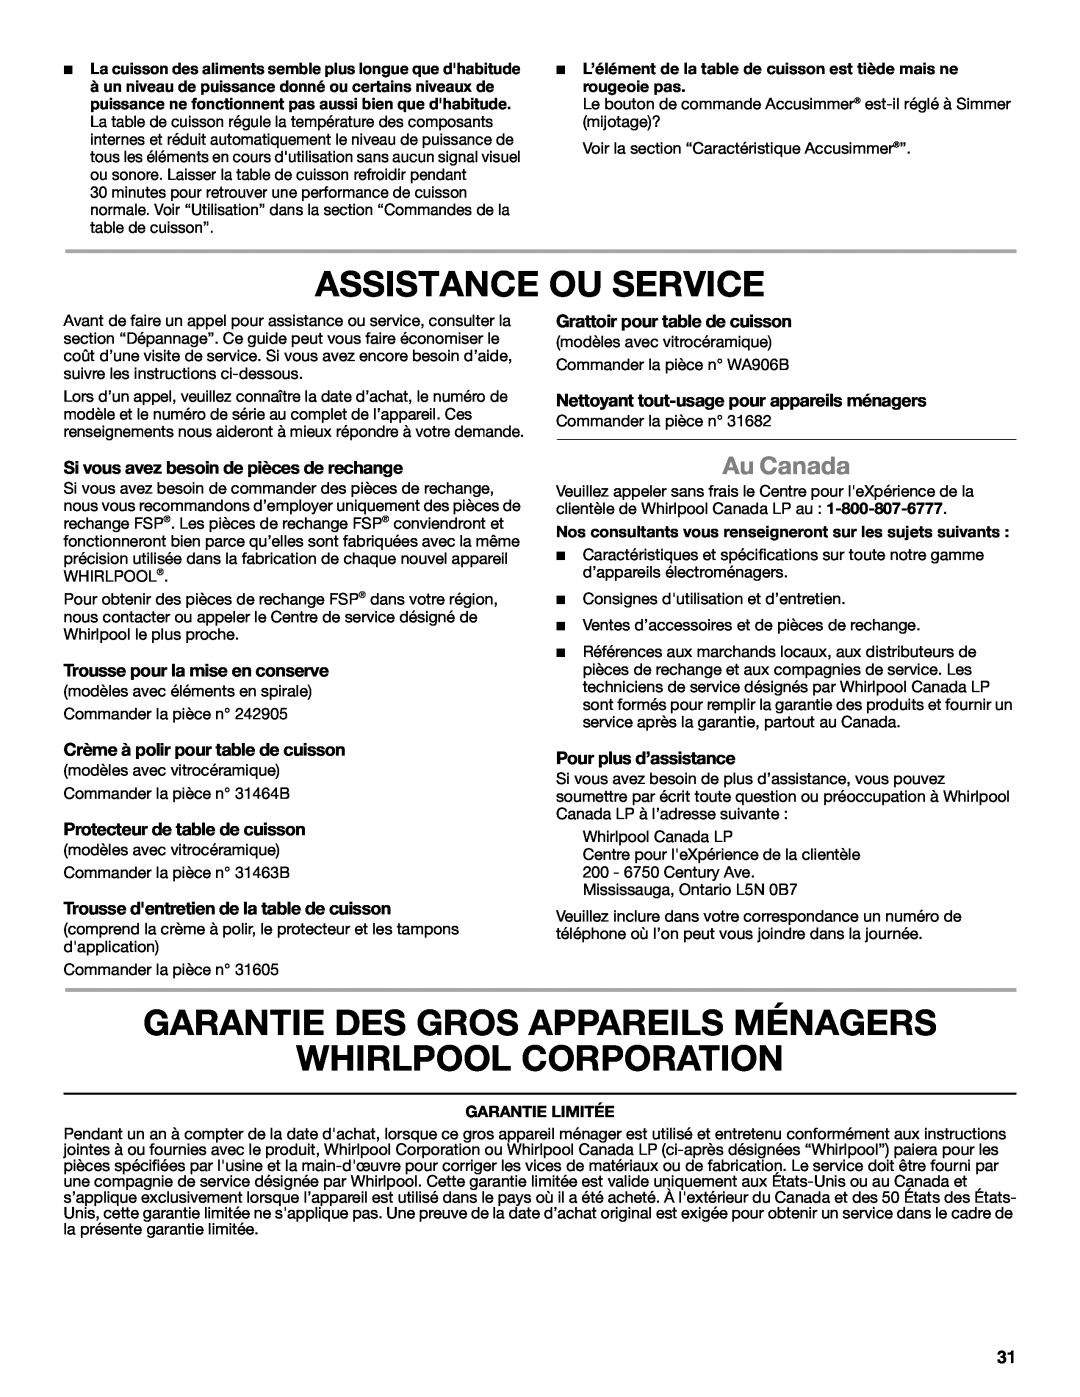 Whirlpool G9CE3065XS manual Assistance Ou Service, Garantie Des Gros Appareils Ménagers Whirlpool Corporation, Au Canada 